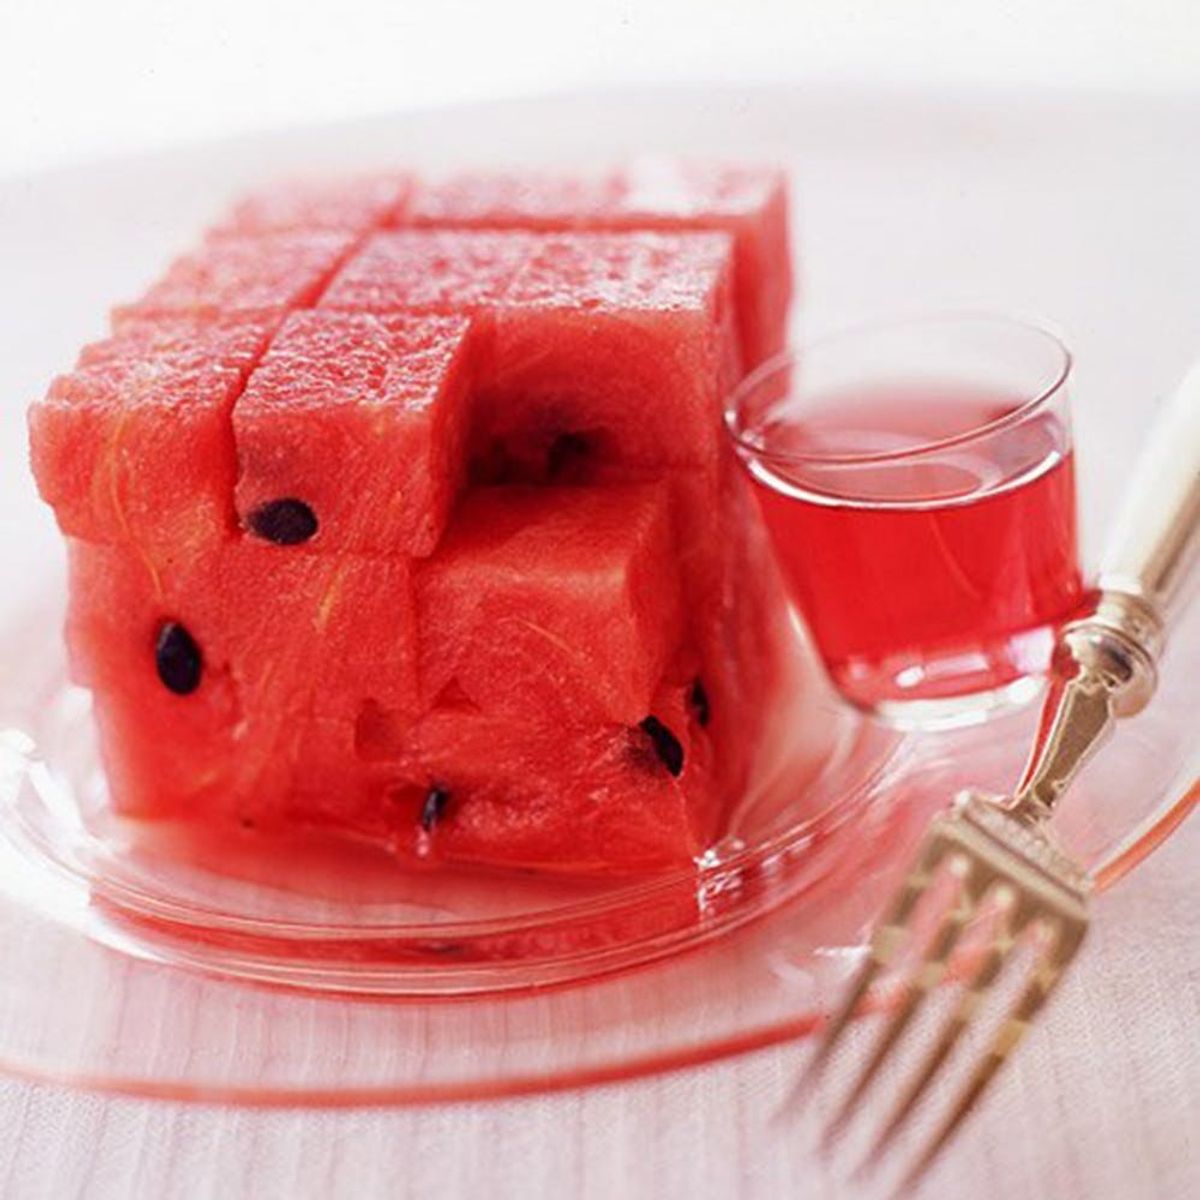 25 Ways to Win With Watermelon